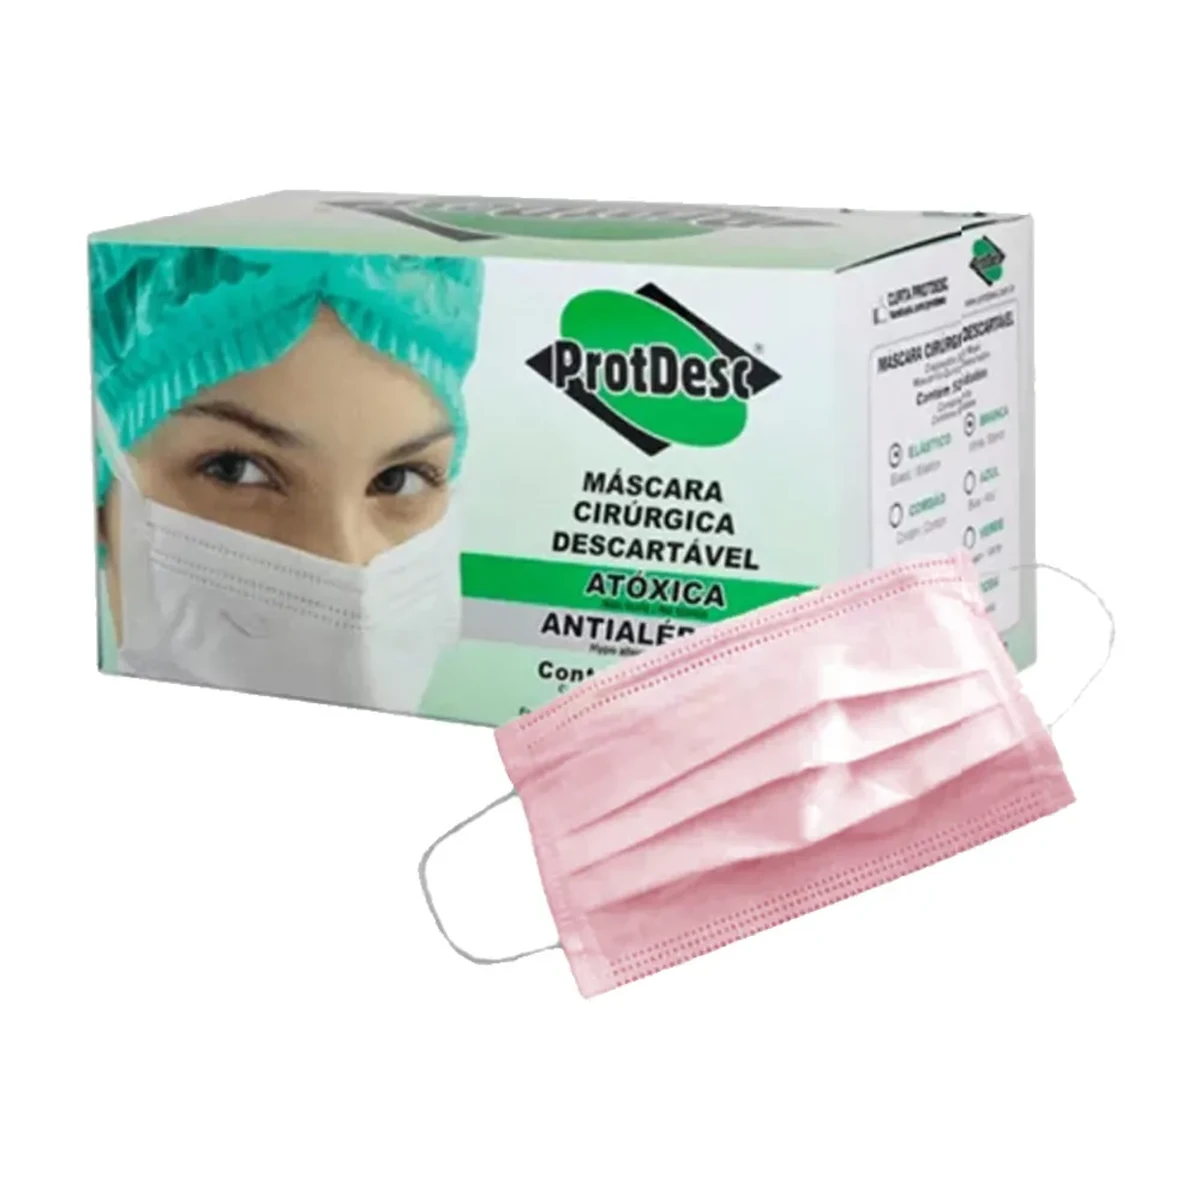 Foto do produto Máscara Cirúrgica Rosa Descartável com Elástico caixa com 50 unid Protdesc